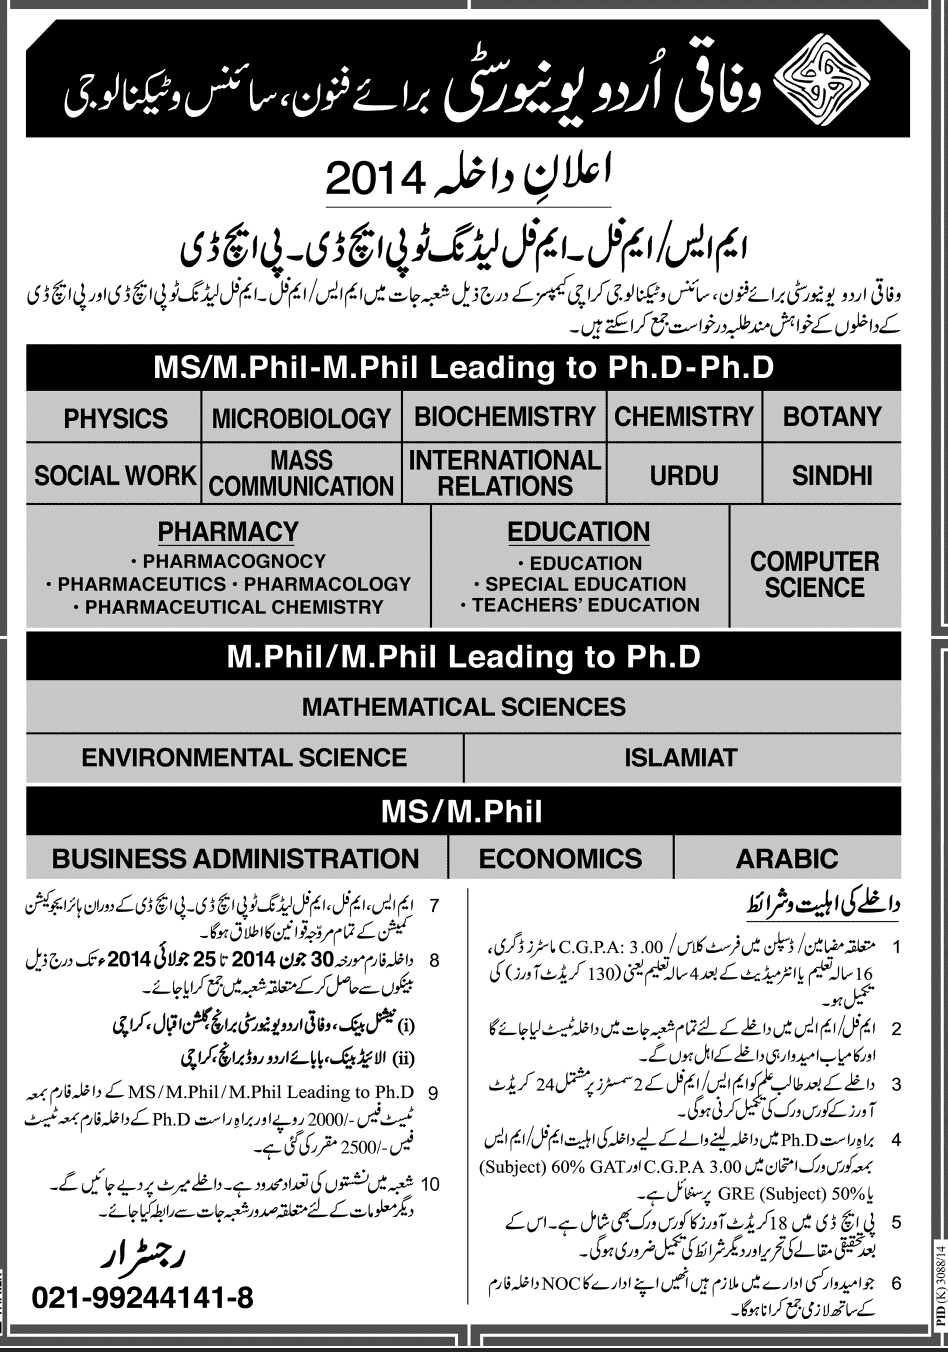 Federal Urdu University Karachi Ms M Phil Phd Admission 2015